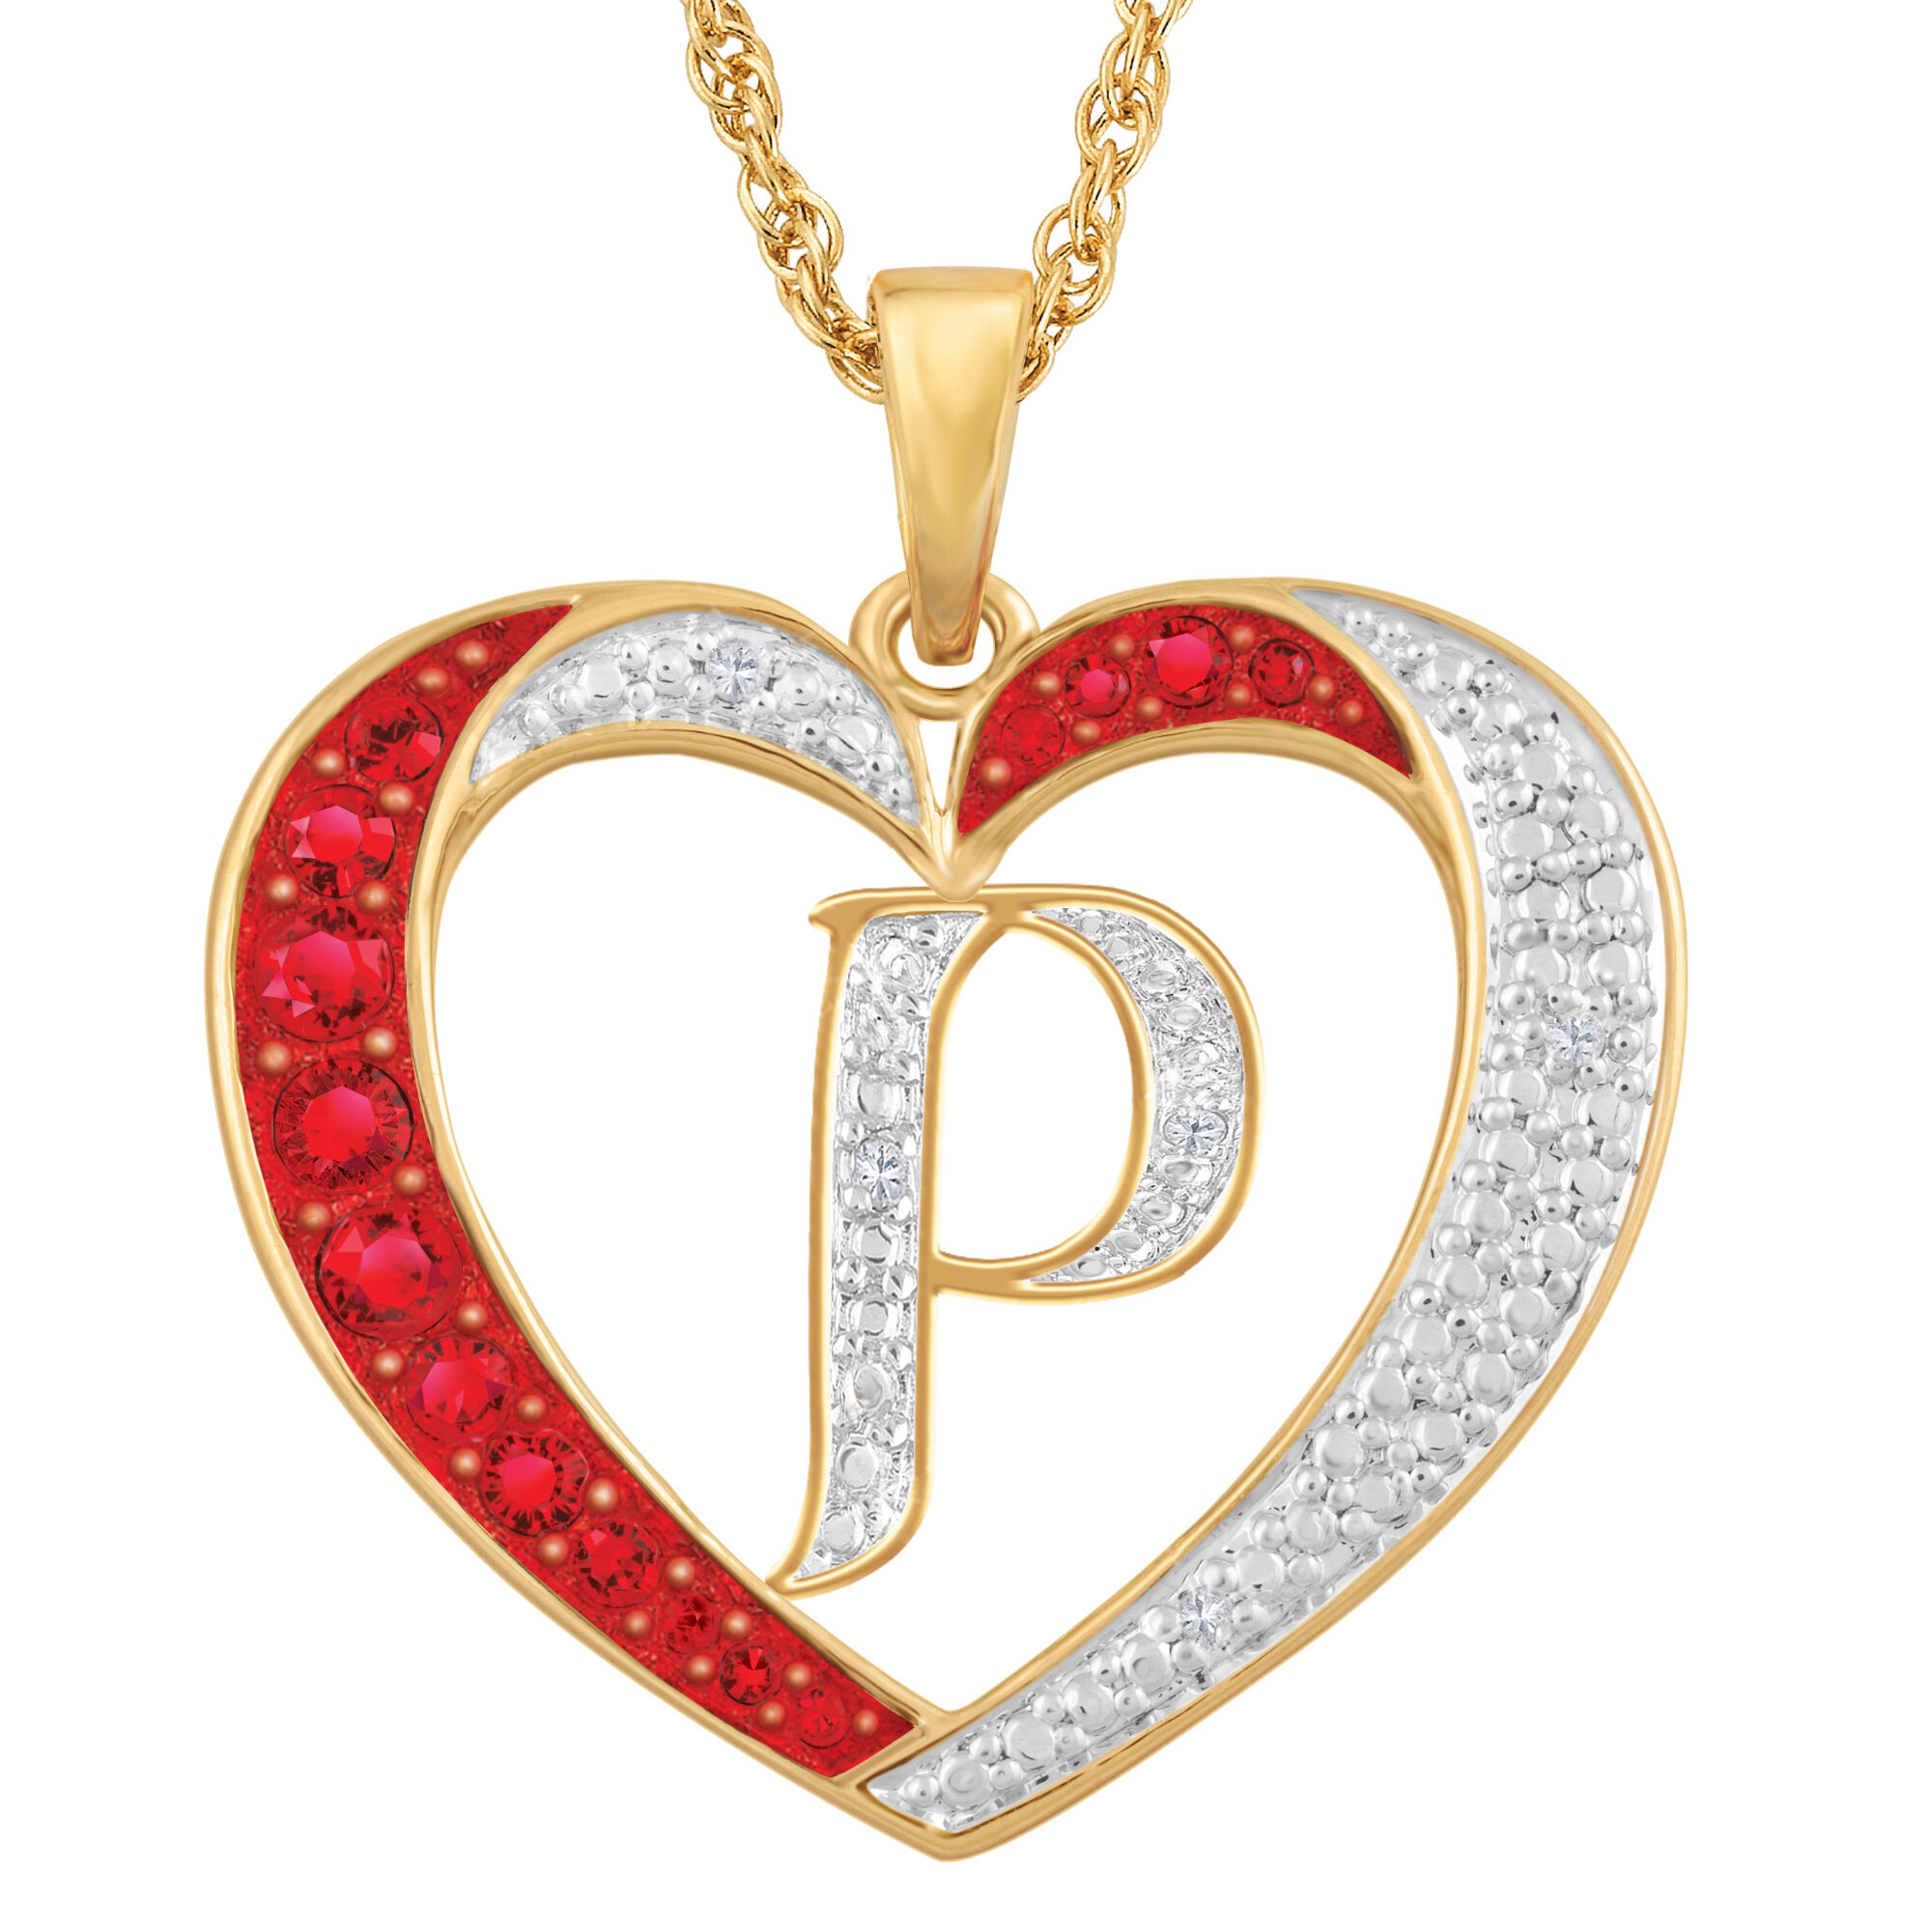 Personalized Diamond Heart Pendant 2300 0011 p initial P